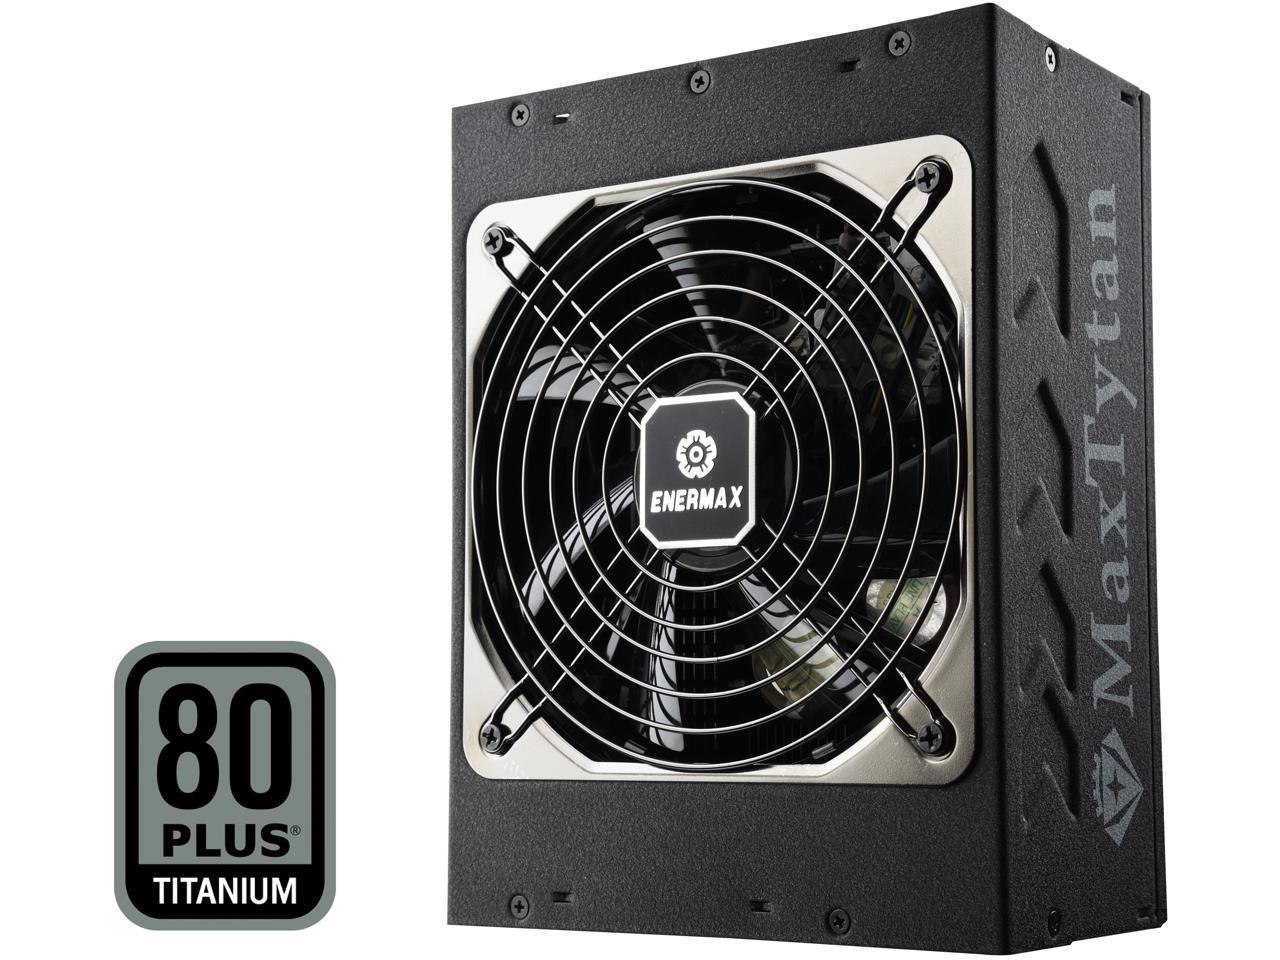 Enermax MaxTytan 80+ Titanium Certified Full Modular 1050W Power Supply With DFR Technology